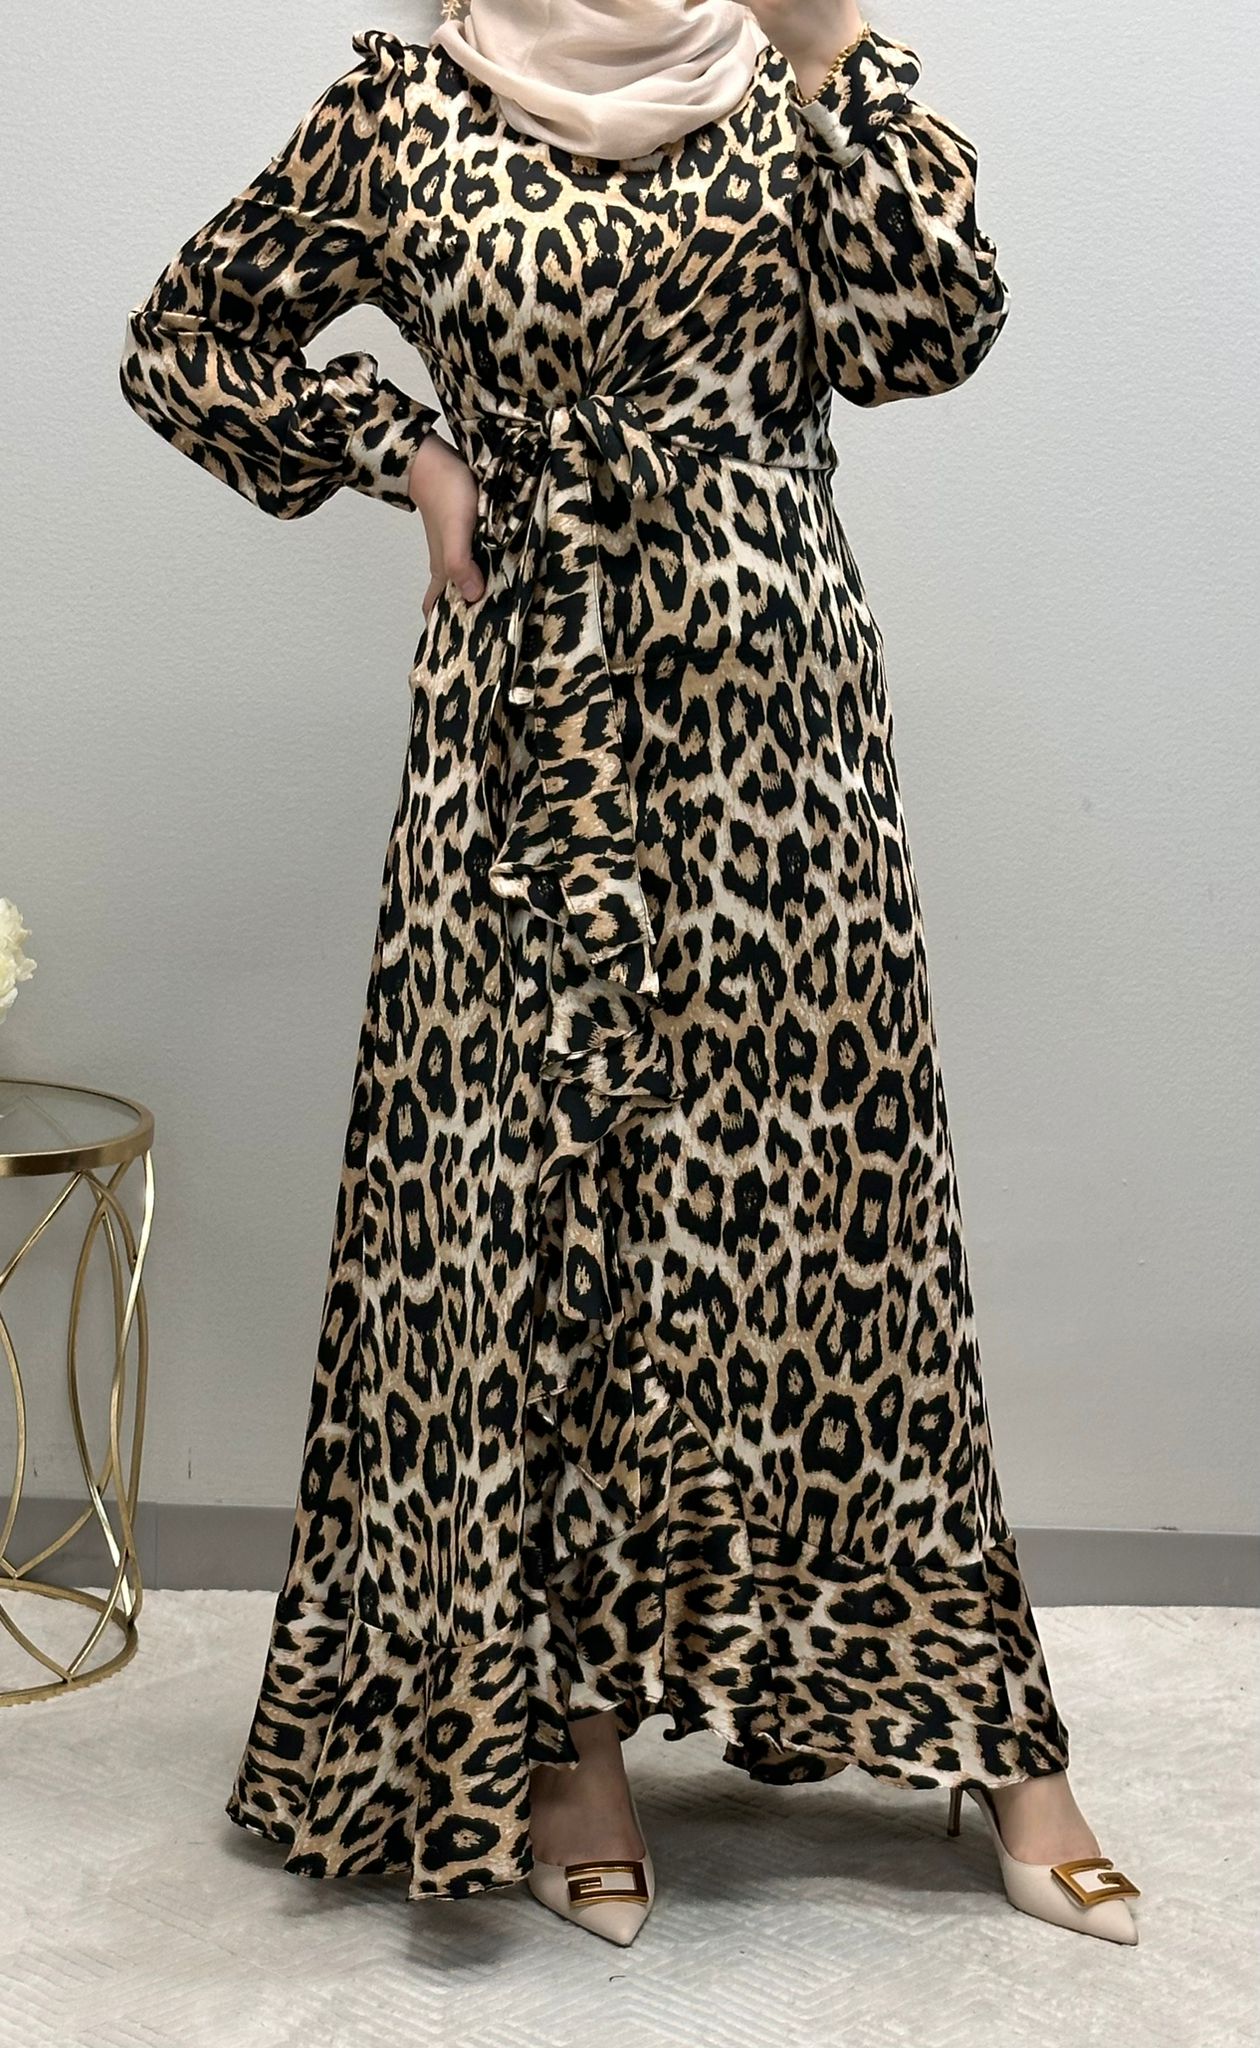 Fierce Sophistication: Ruffled Tiger Dress